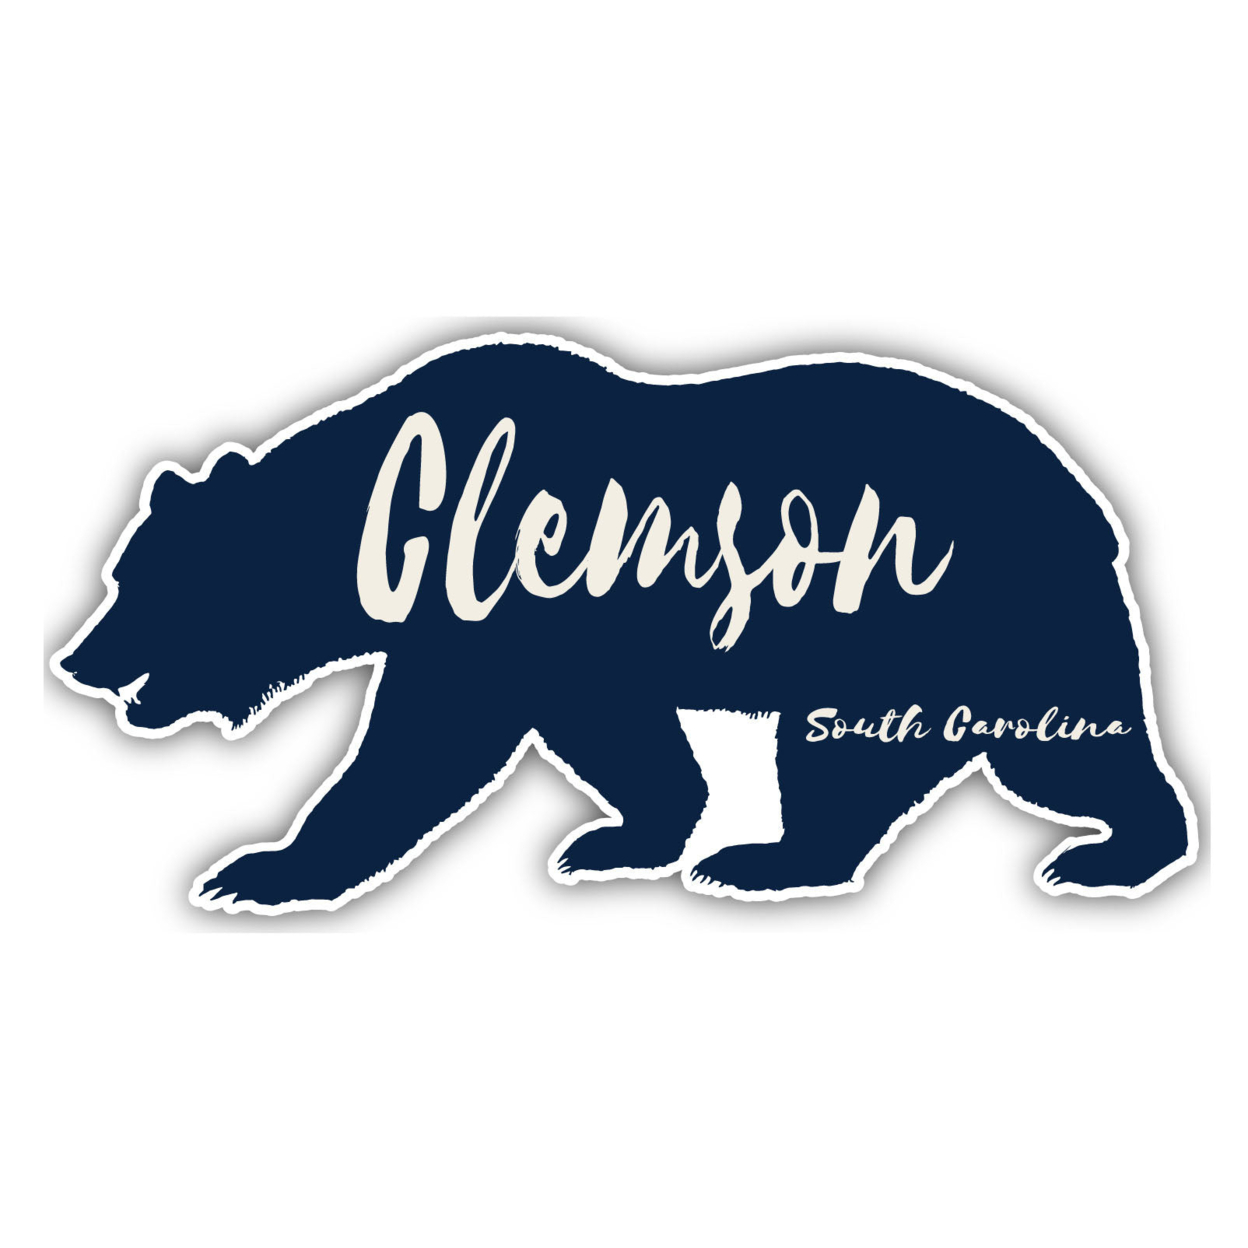 Clemson South Carolina Souvenir Decorative Stickers (Choose Theme And Size) - 4-Pack, 4-Inch, Tent